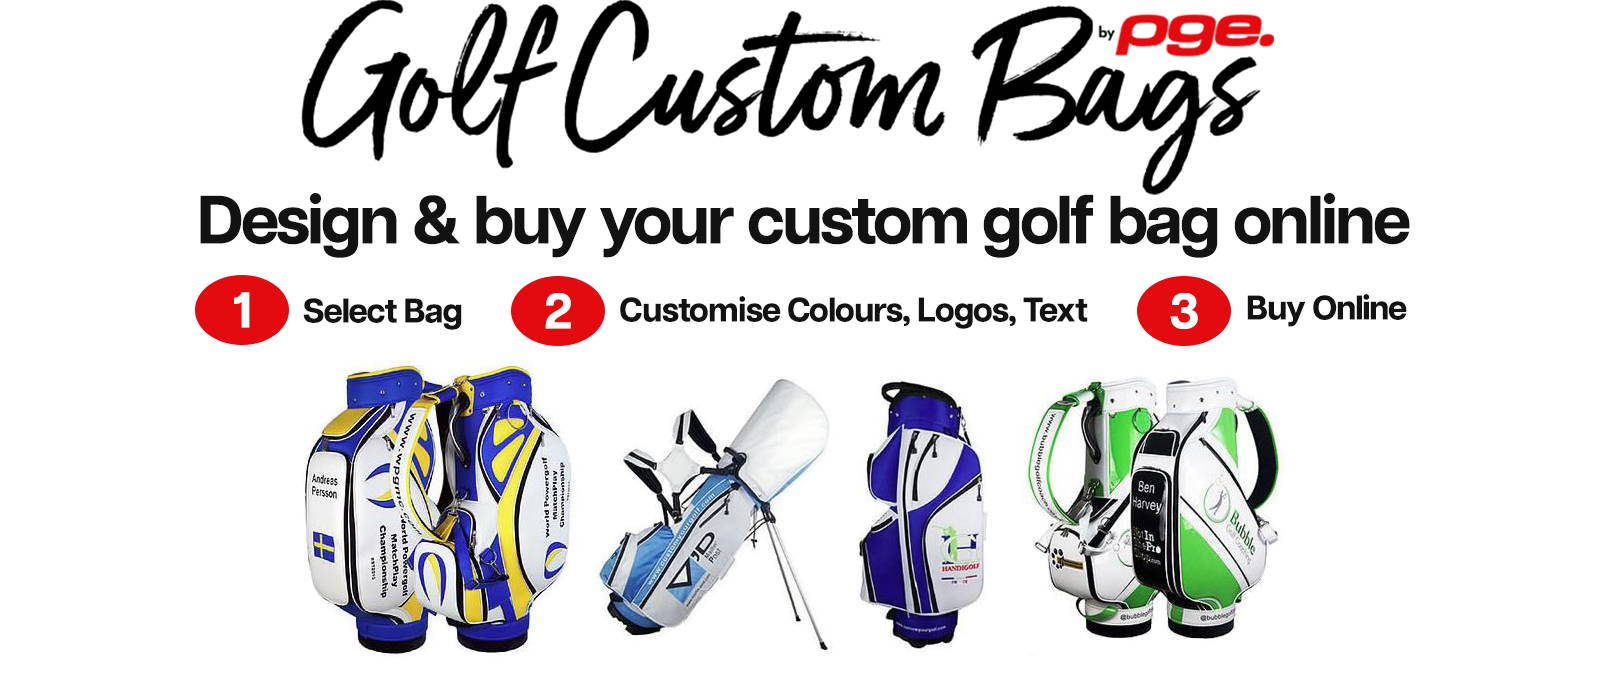 Custom Golf Bags - design & buy your customised golf bag online